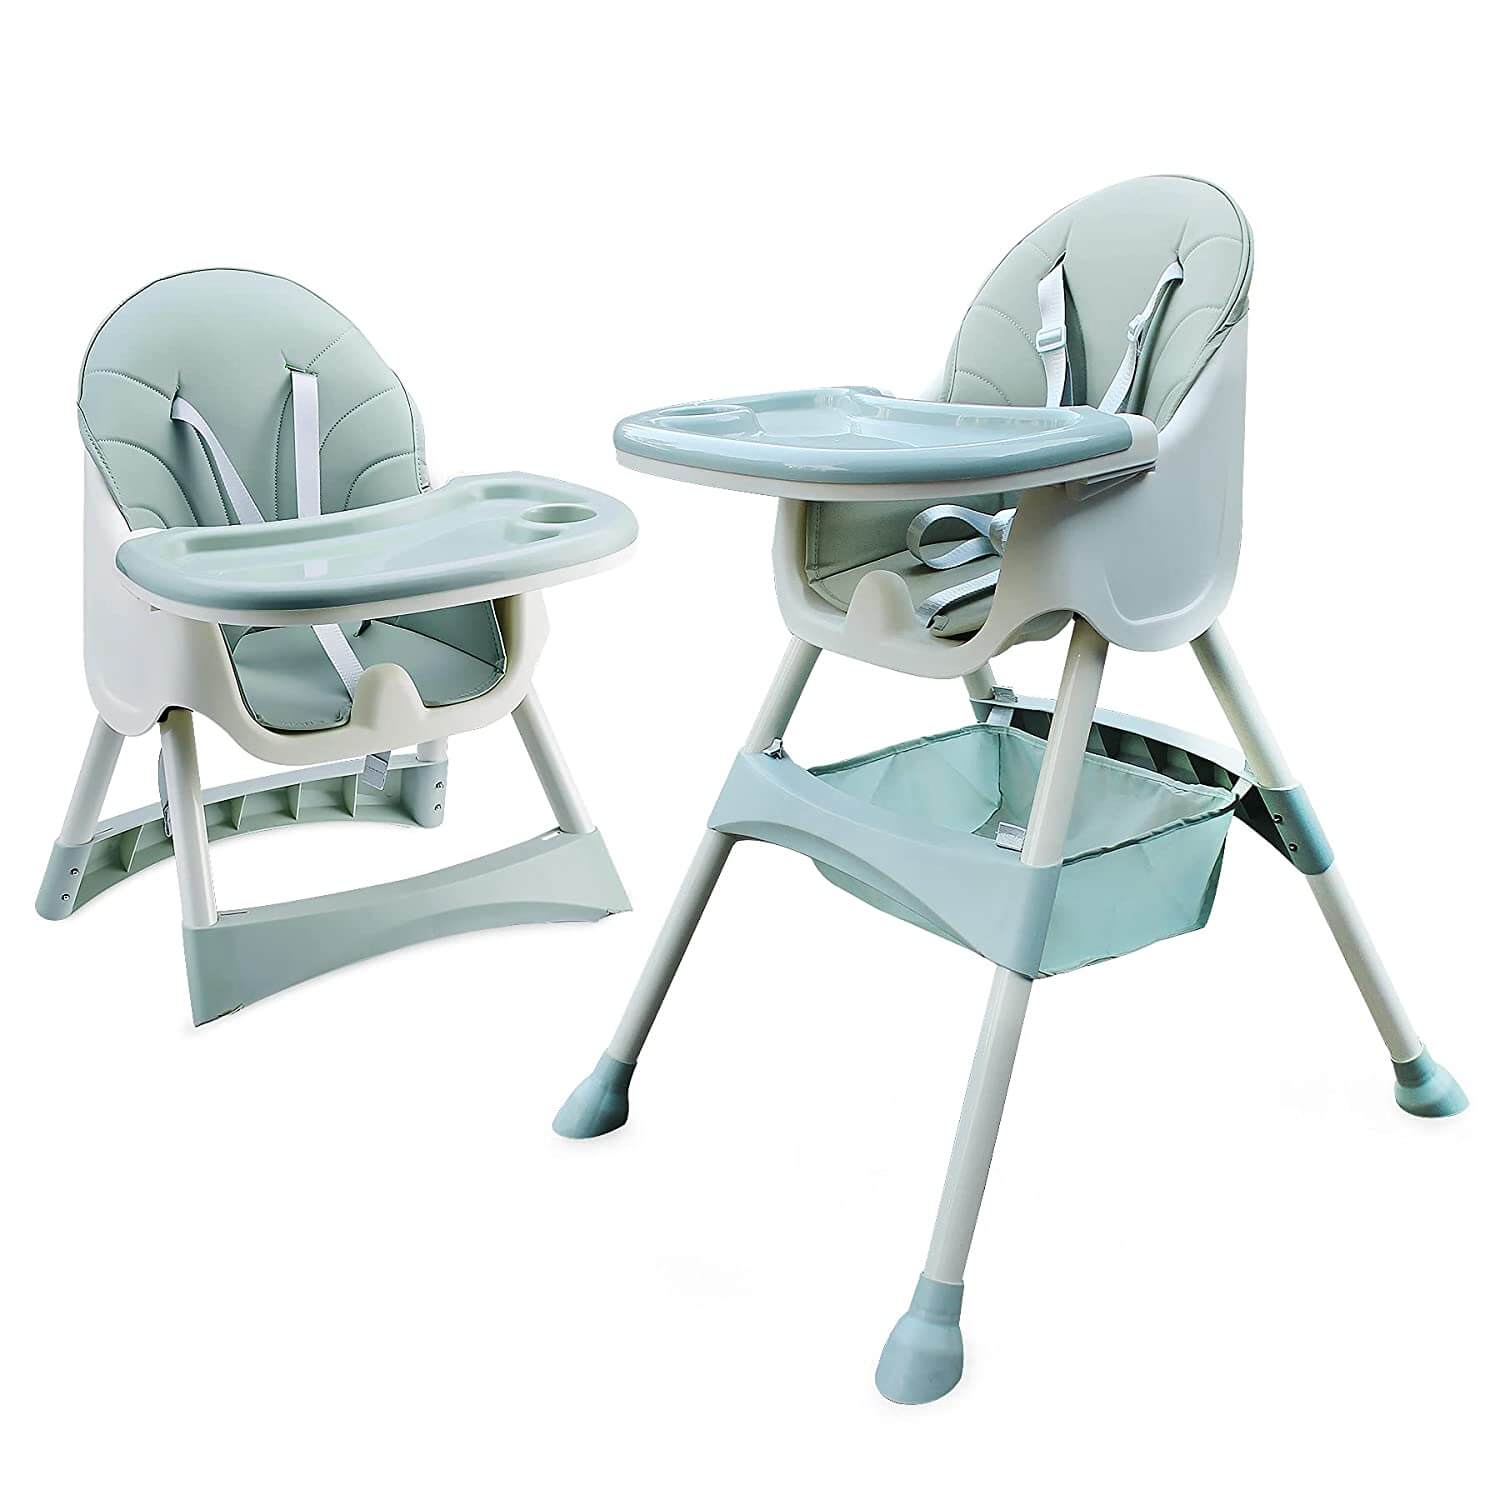 MonBebe Baby High Chair for Feeding 2-in-1 Baby Feeding Chair